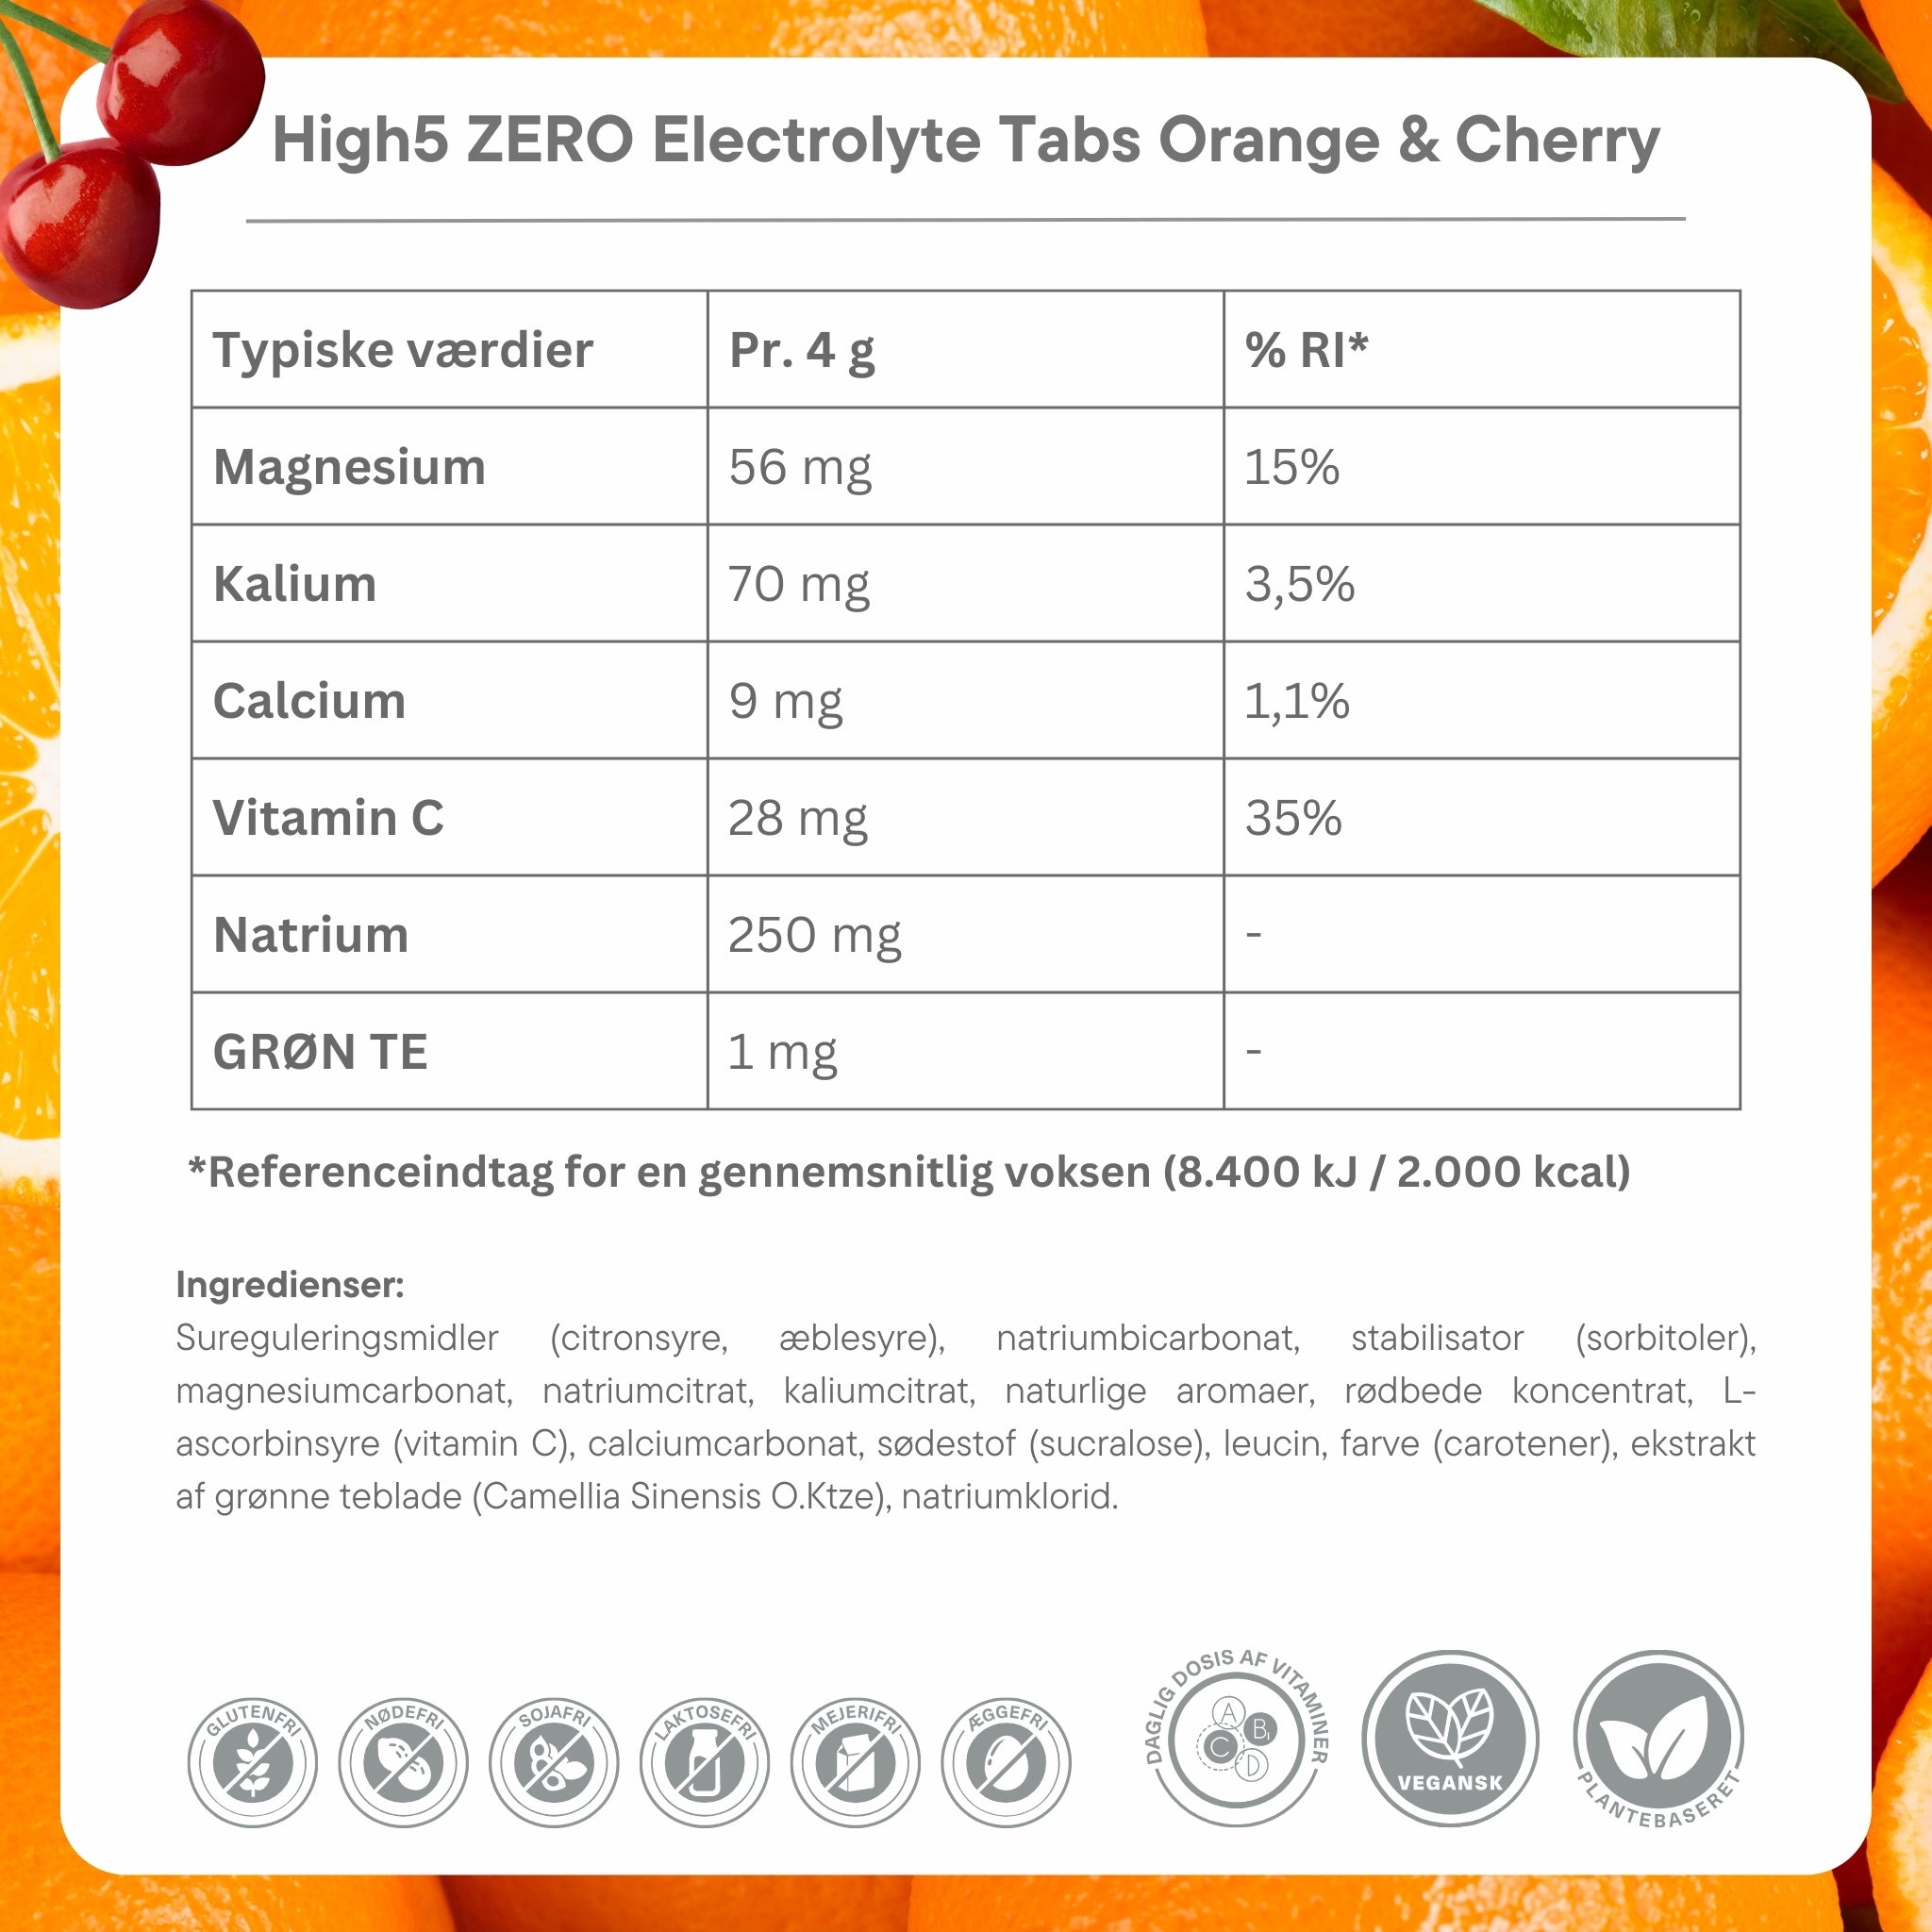 High5 ZERO Electrolyte Tabs Orange & Cherry Ingredients DK - datovare